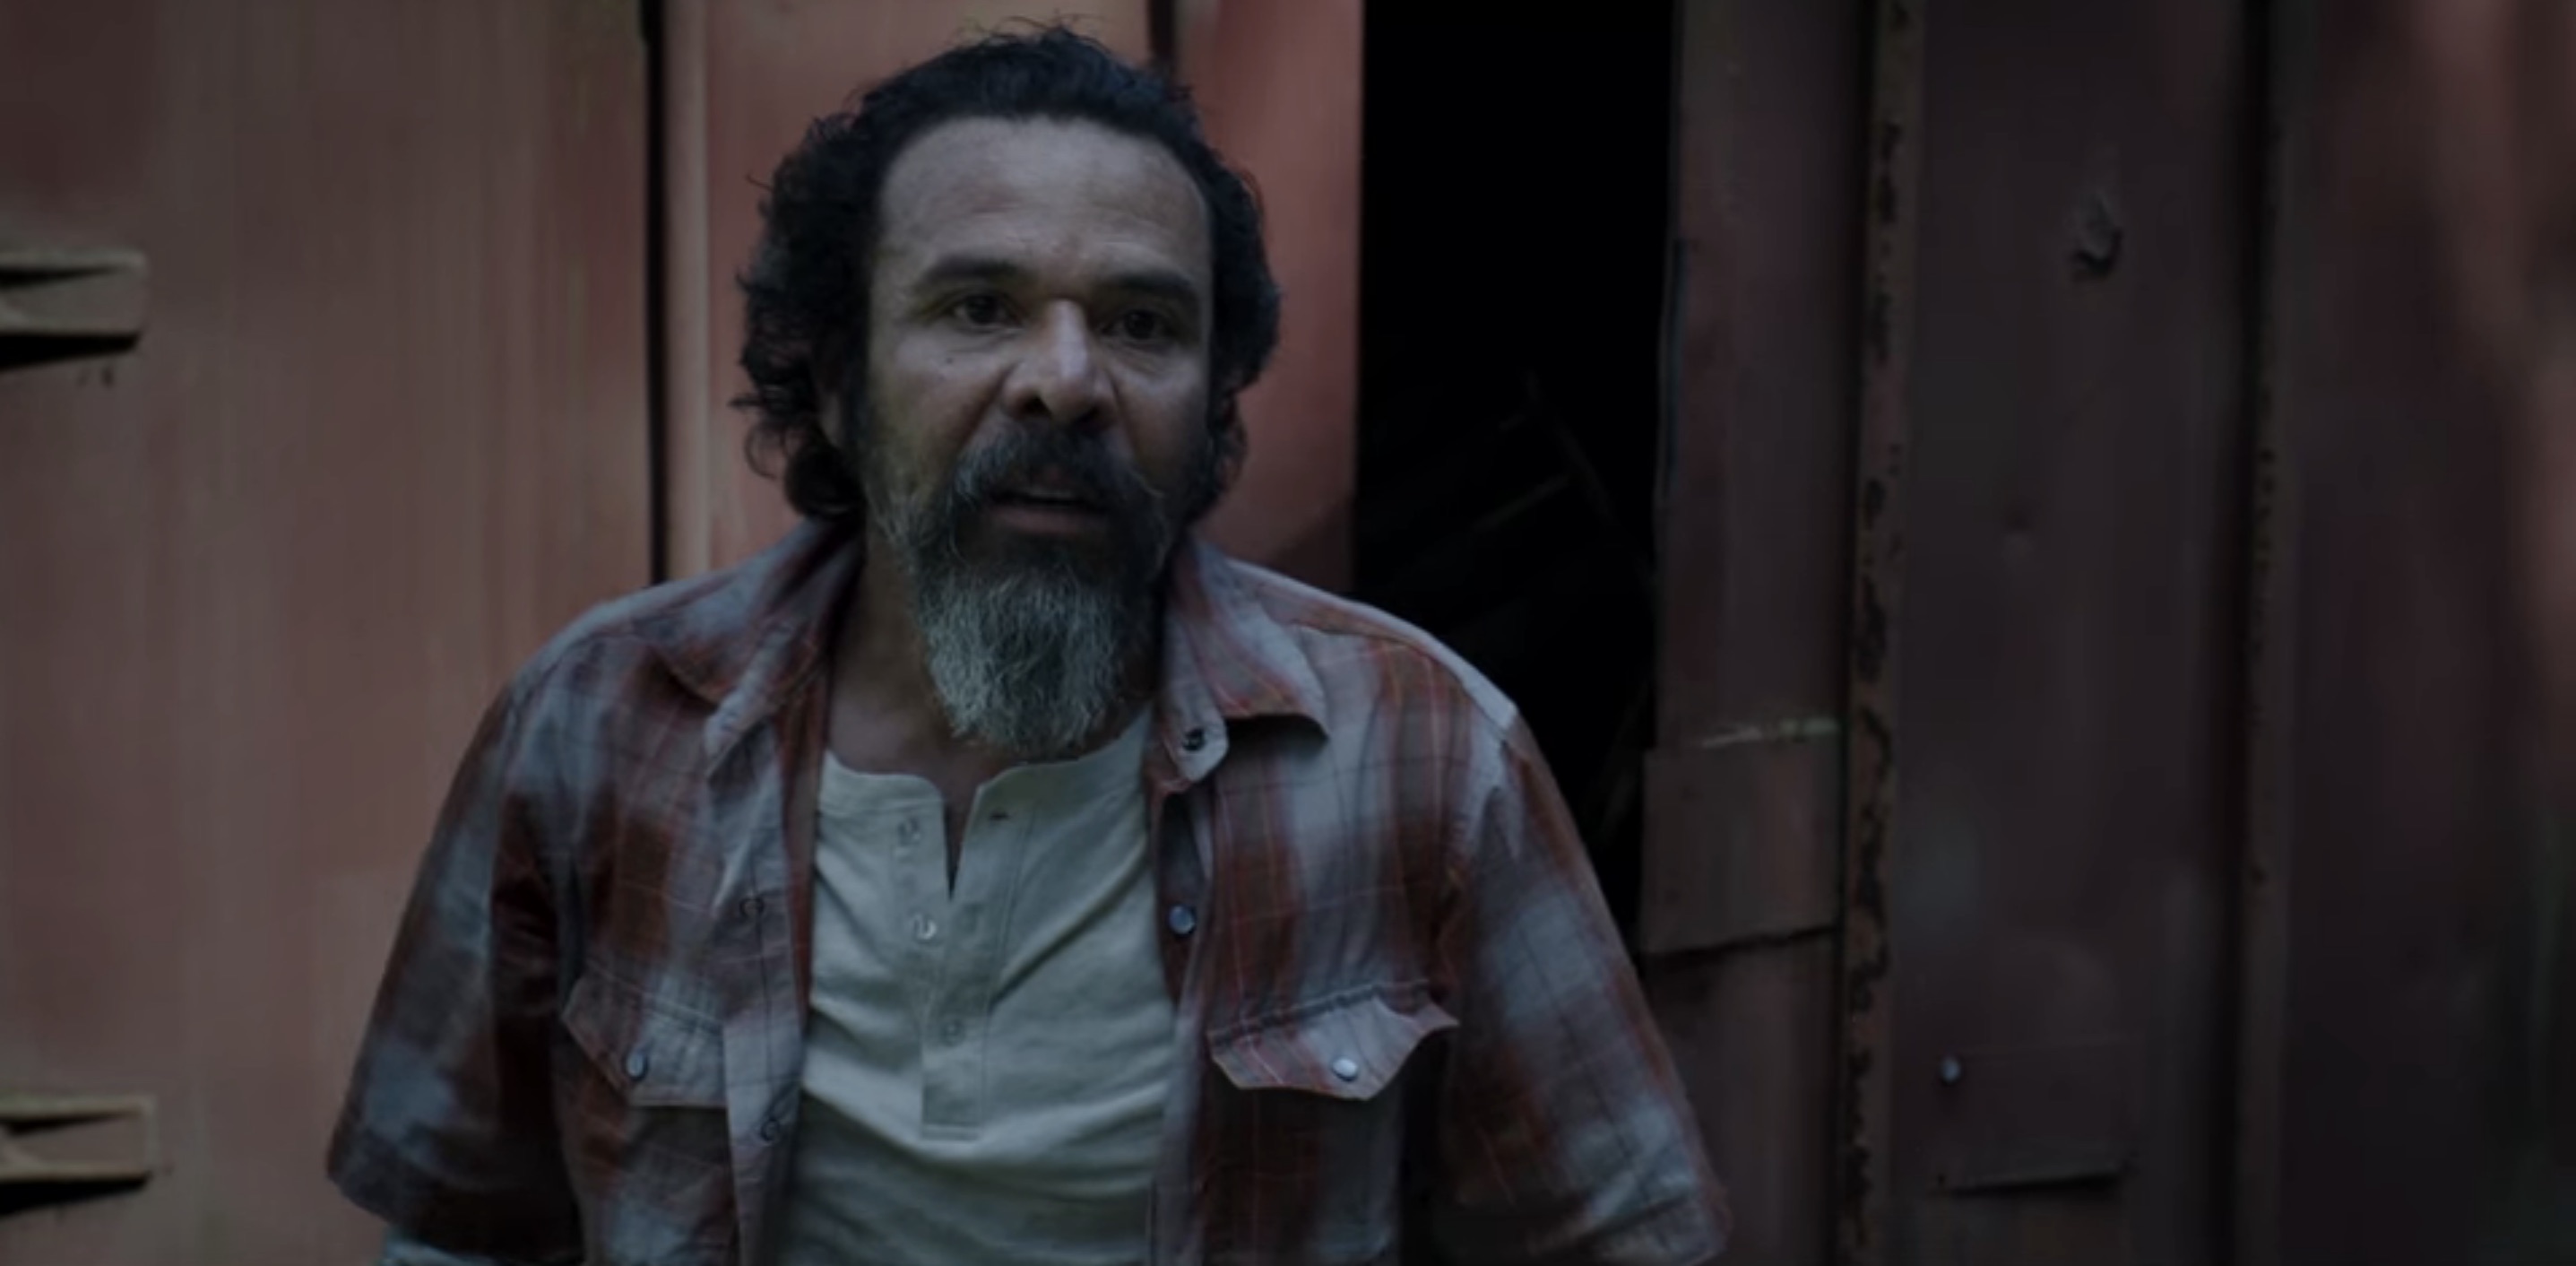 Last Seen Alive Cast on Netflix - Michael Irby as Oscar